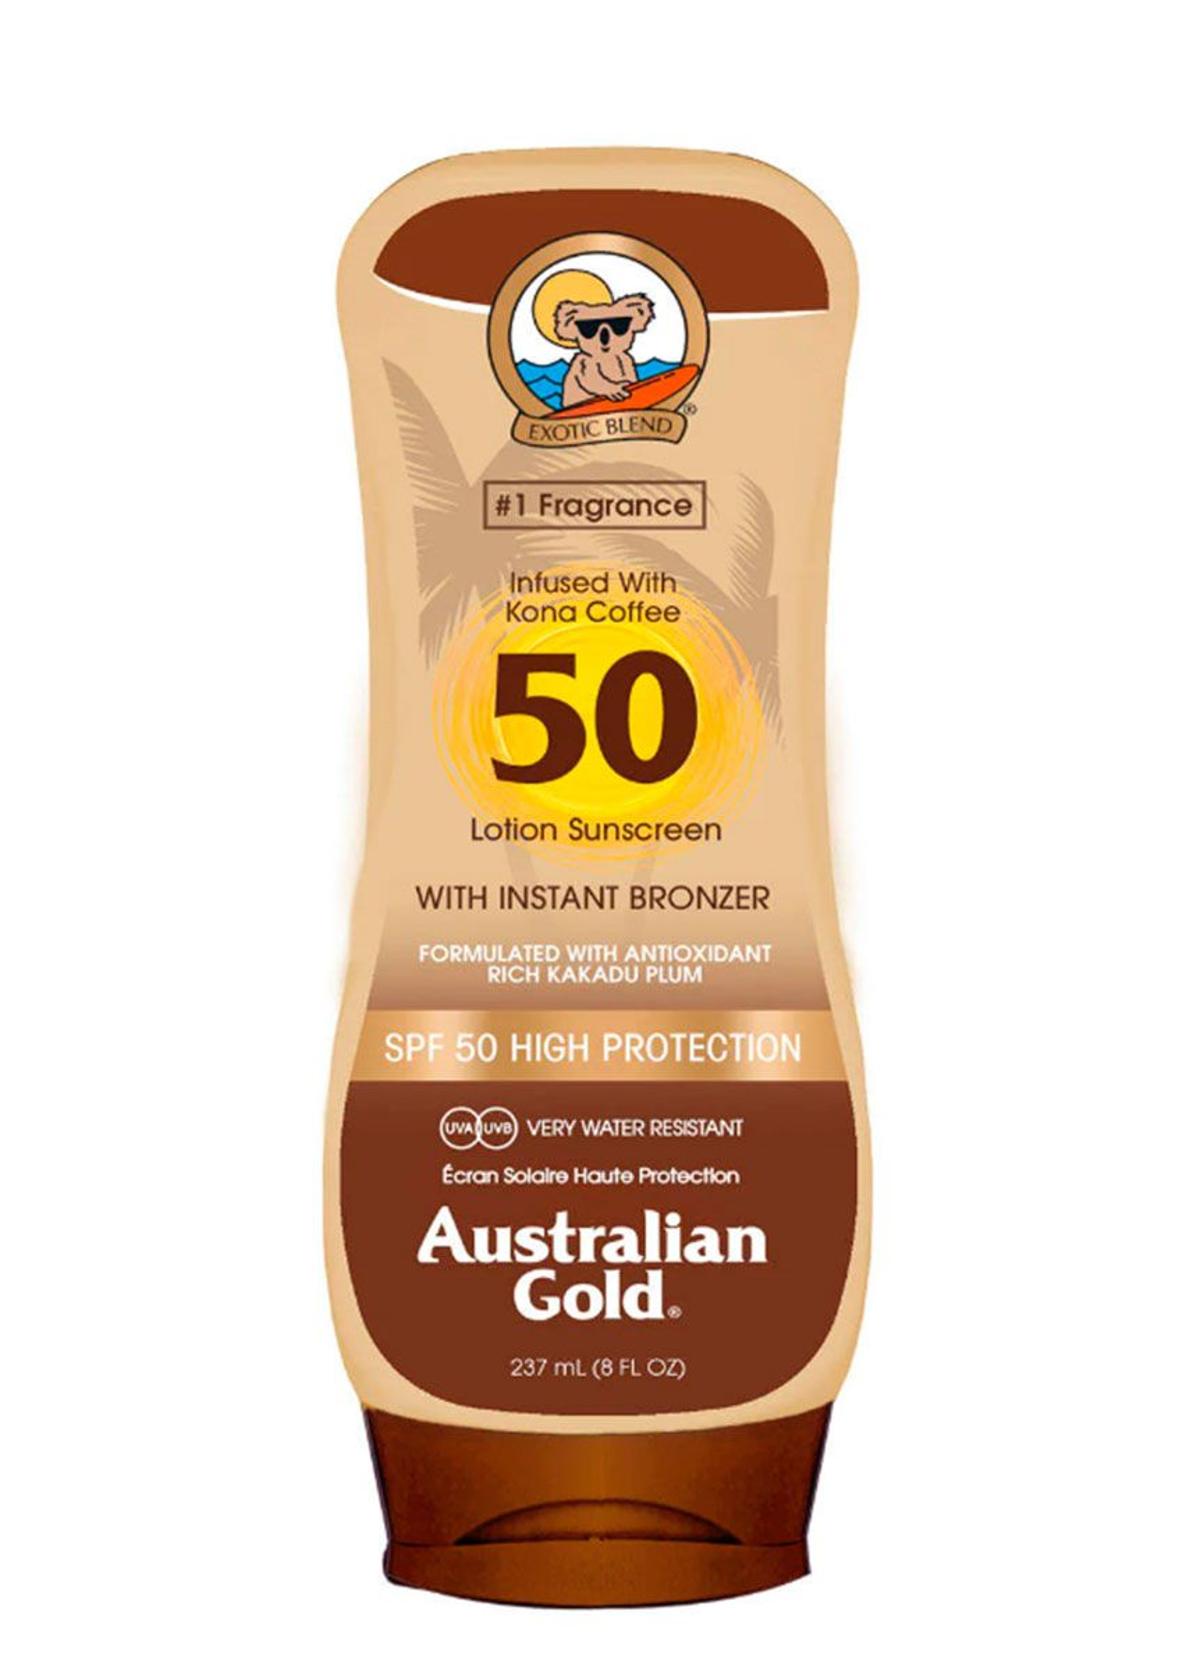 Crema solar, de Australian Gold